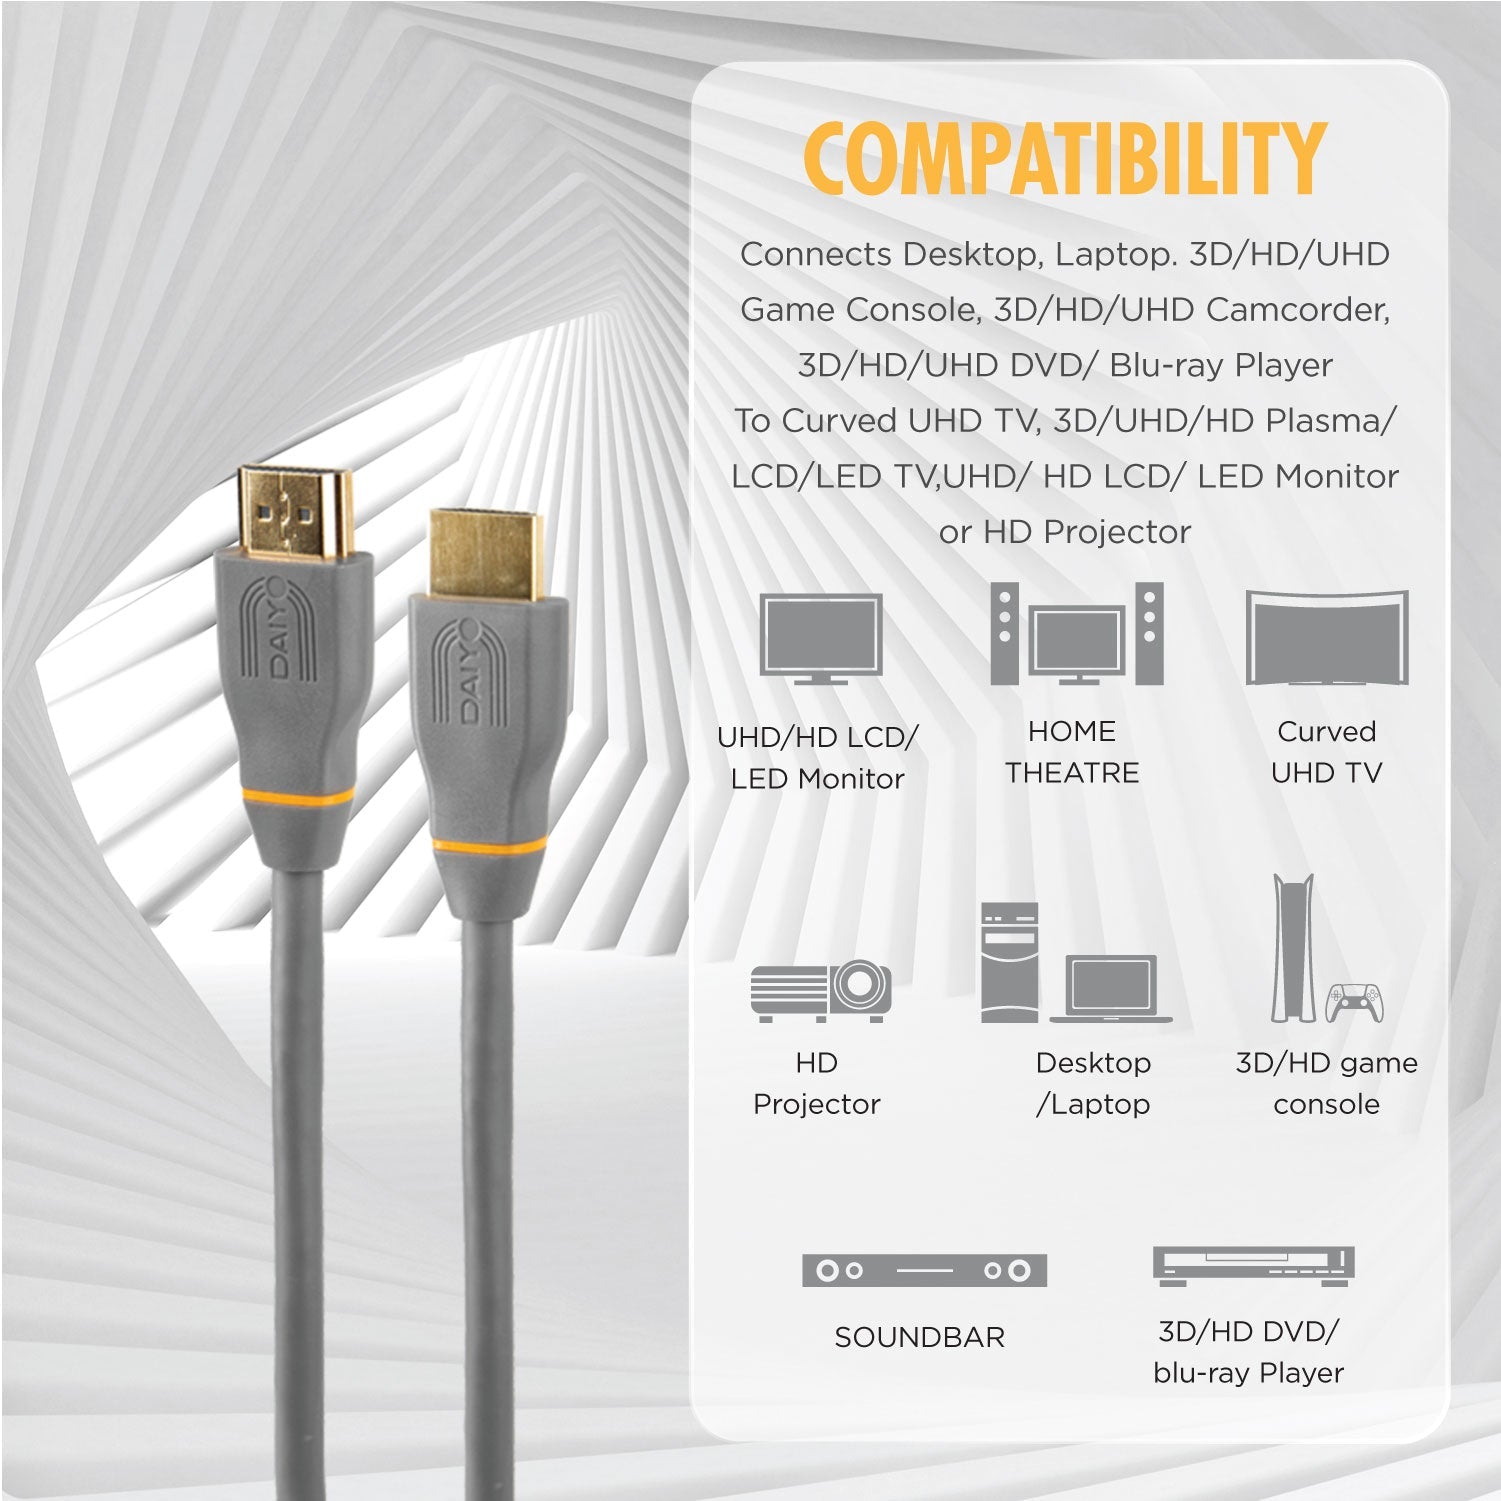 Daiyo TA 5662 HD Series 4K Ultra High Definition (UHD) HDMI Ver 2.0 Cable Length 2m 24K Gold Connector